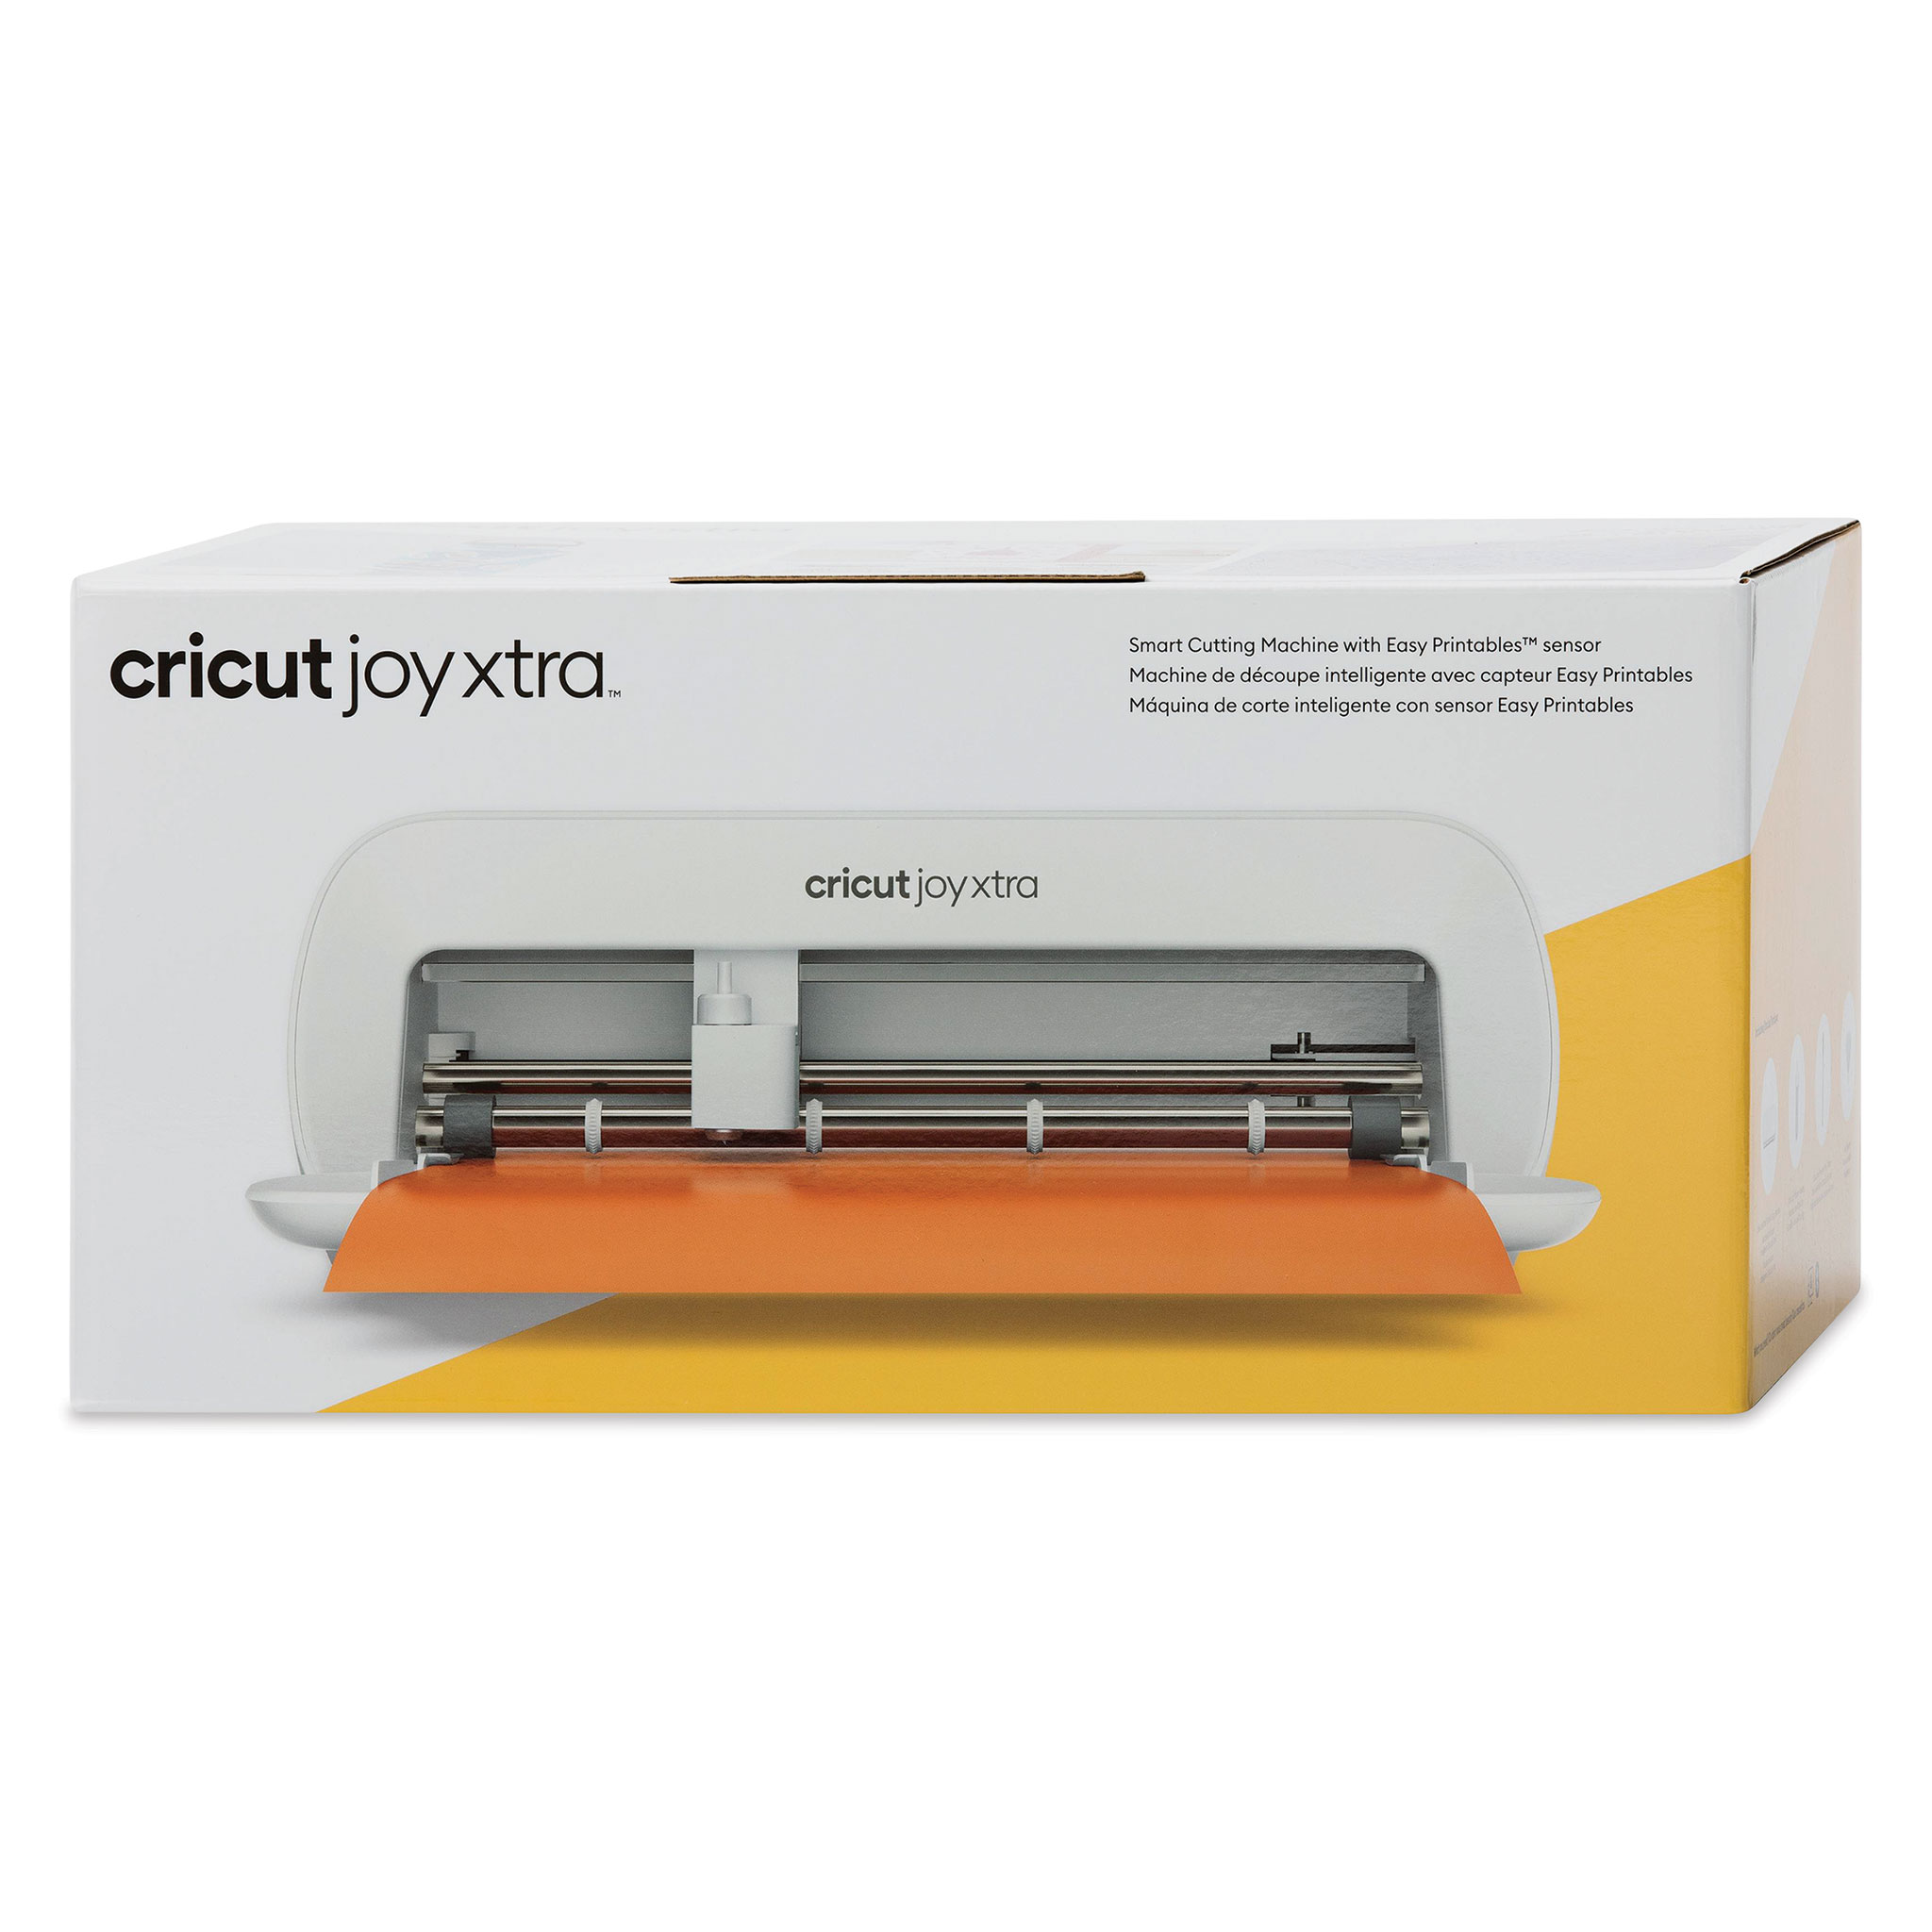 Cricut Joy Xtra Prismatic Glitter Smart Iron-On Heat-Transfer